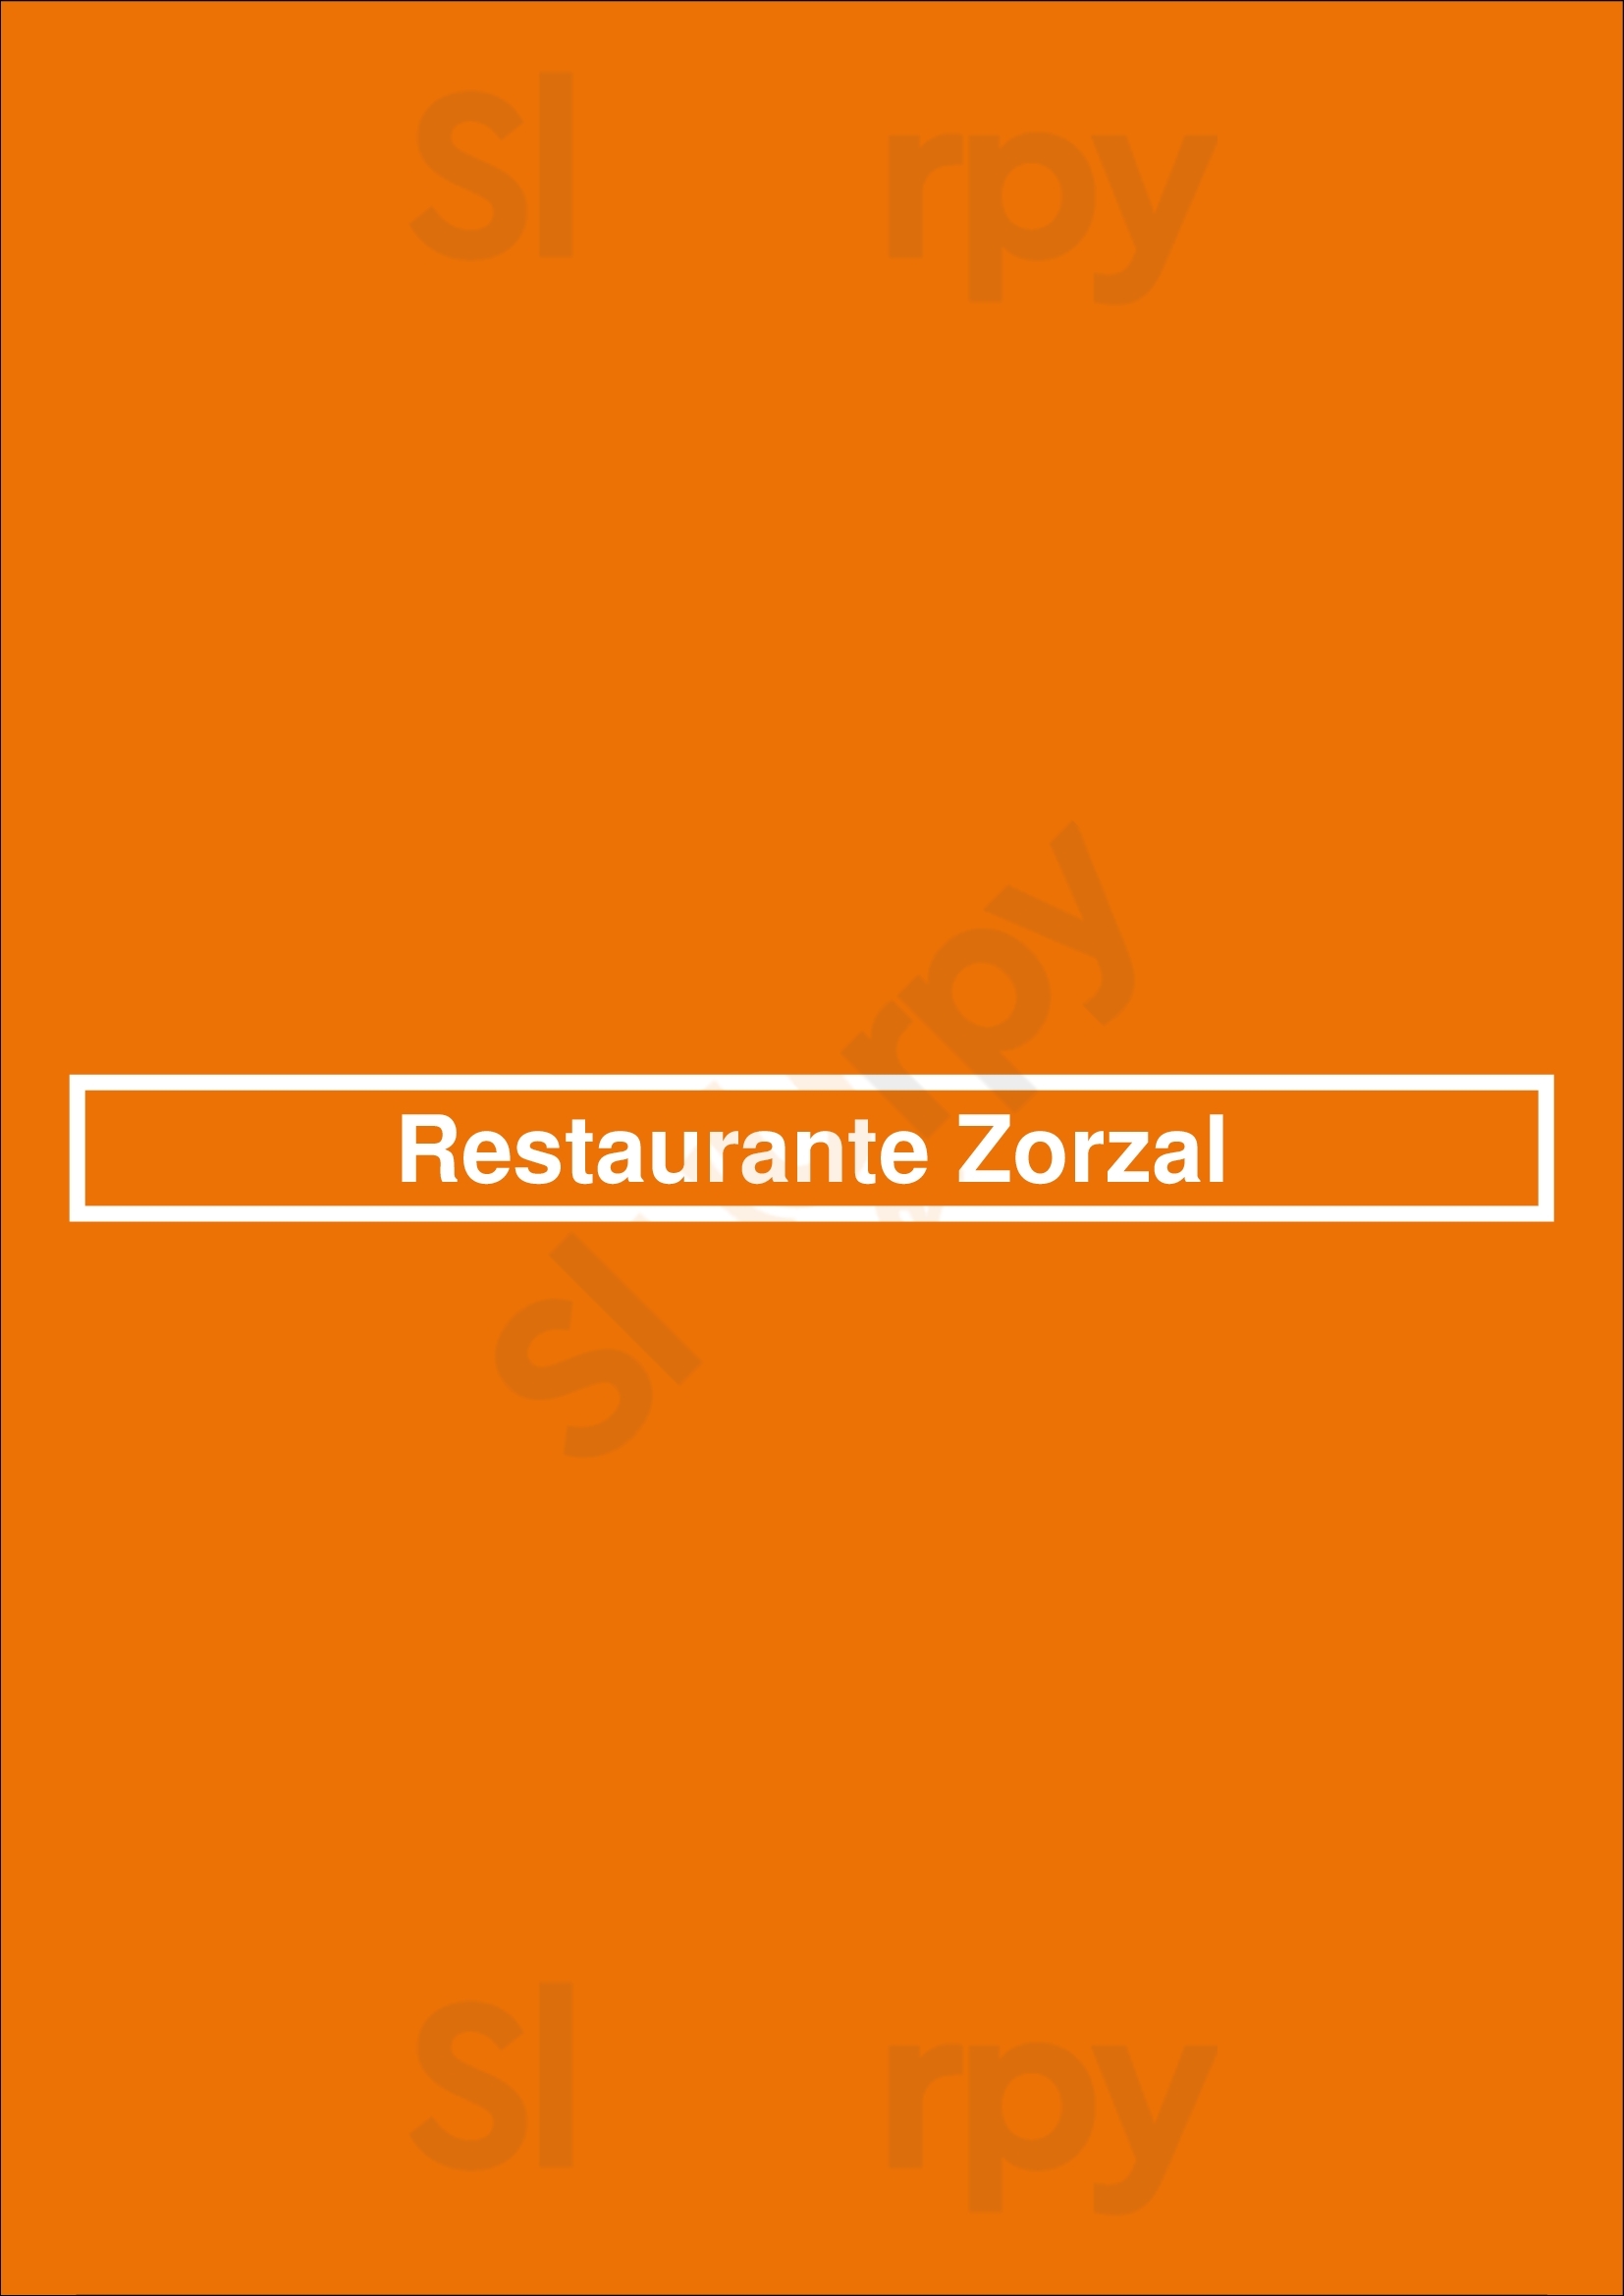 Restaurante Zorzal Buenos Aires Menu - 1